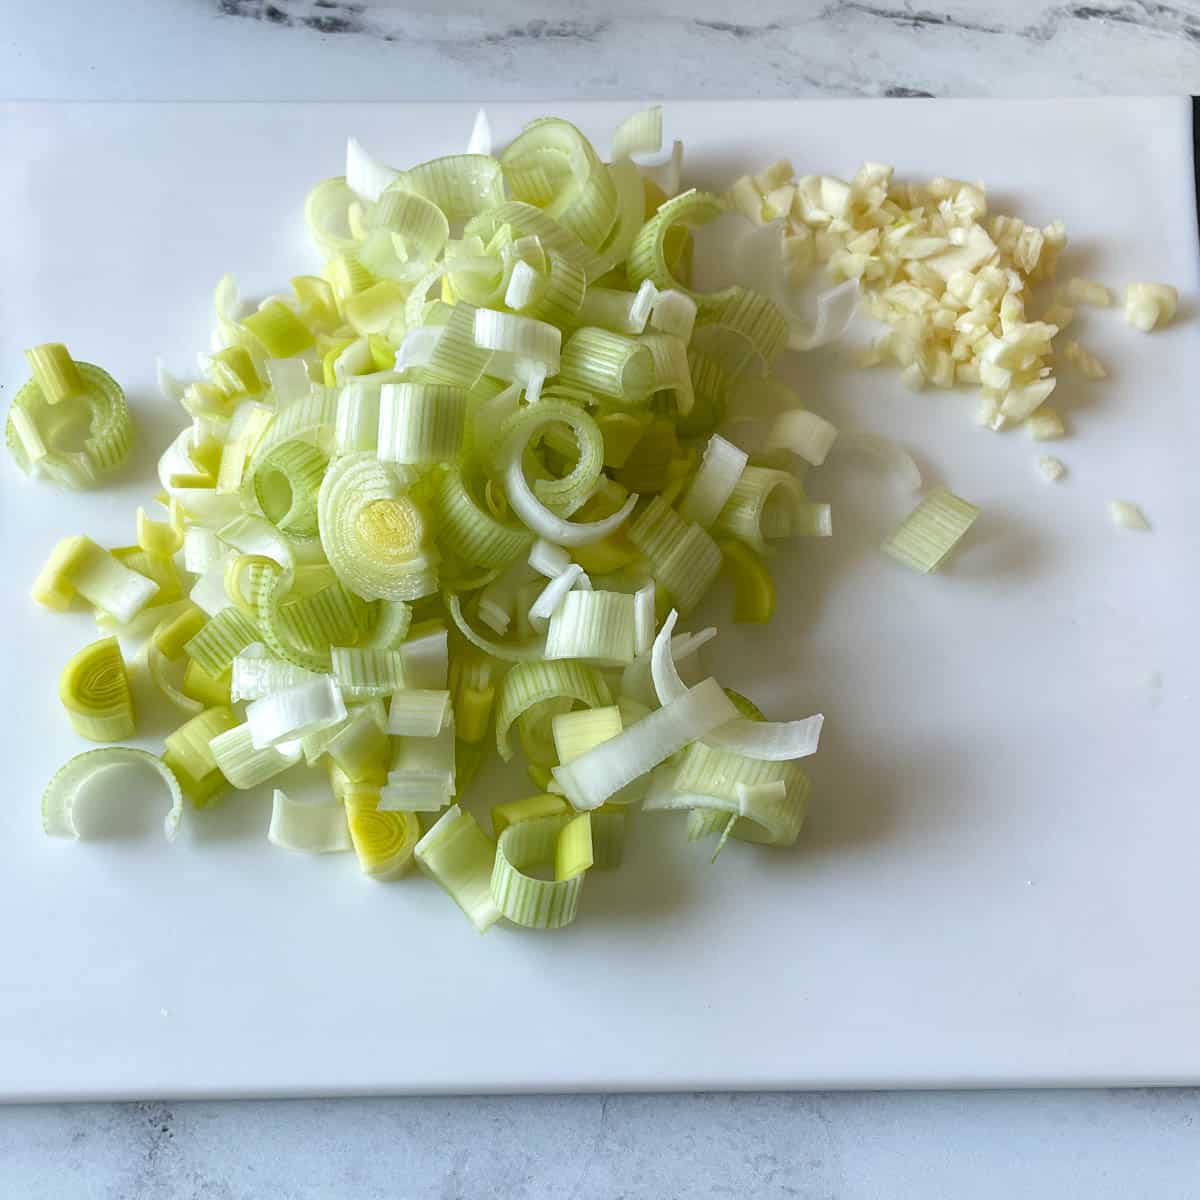 sliced leek and minced garlic sit on a white cutting board.